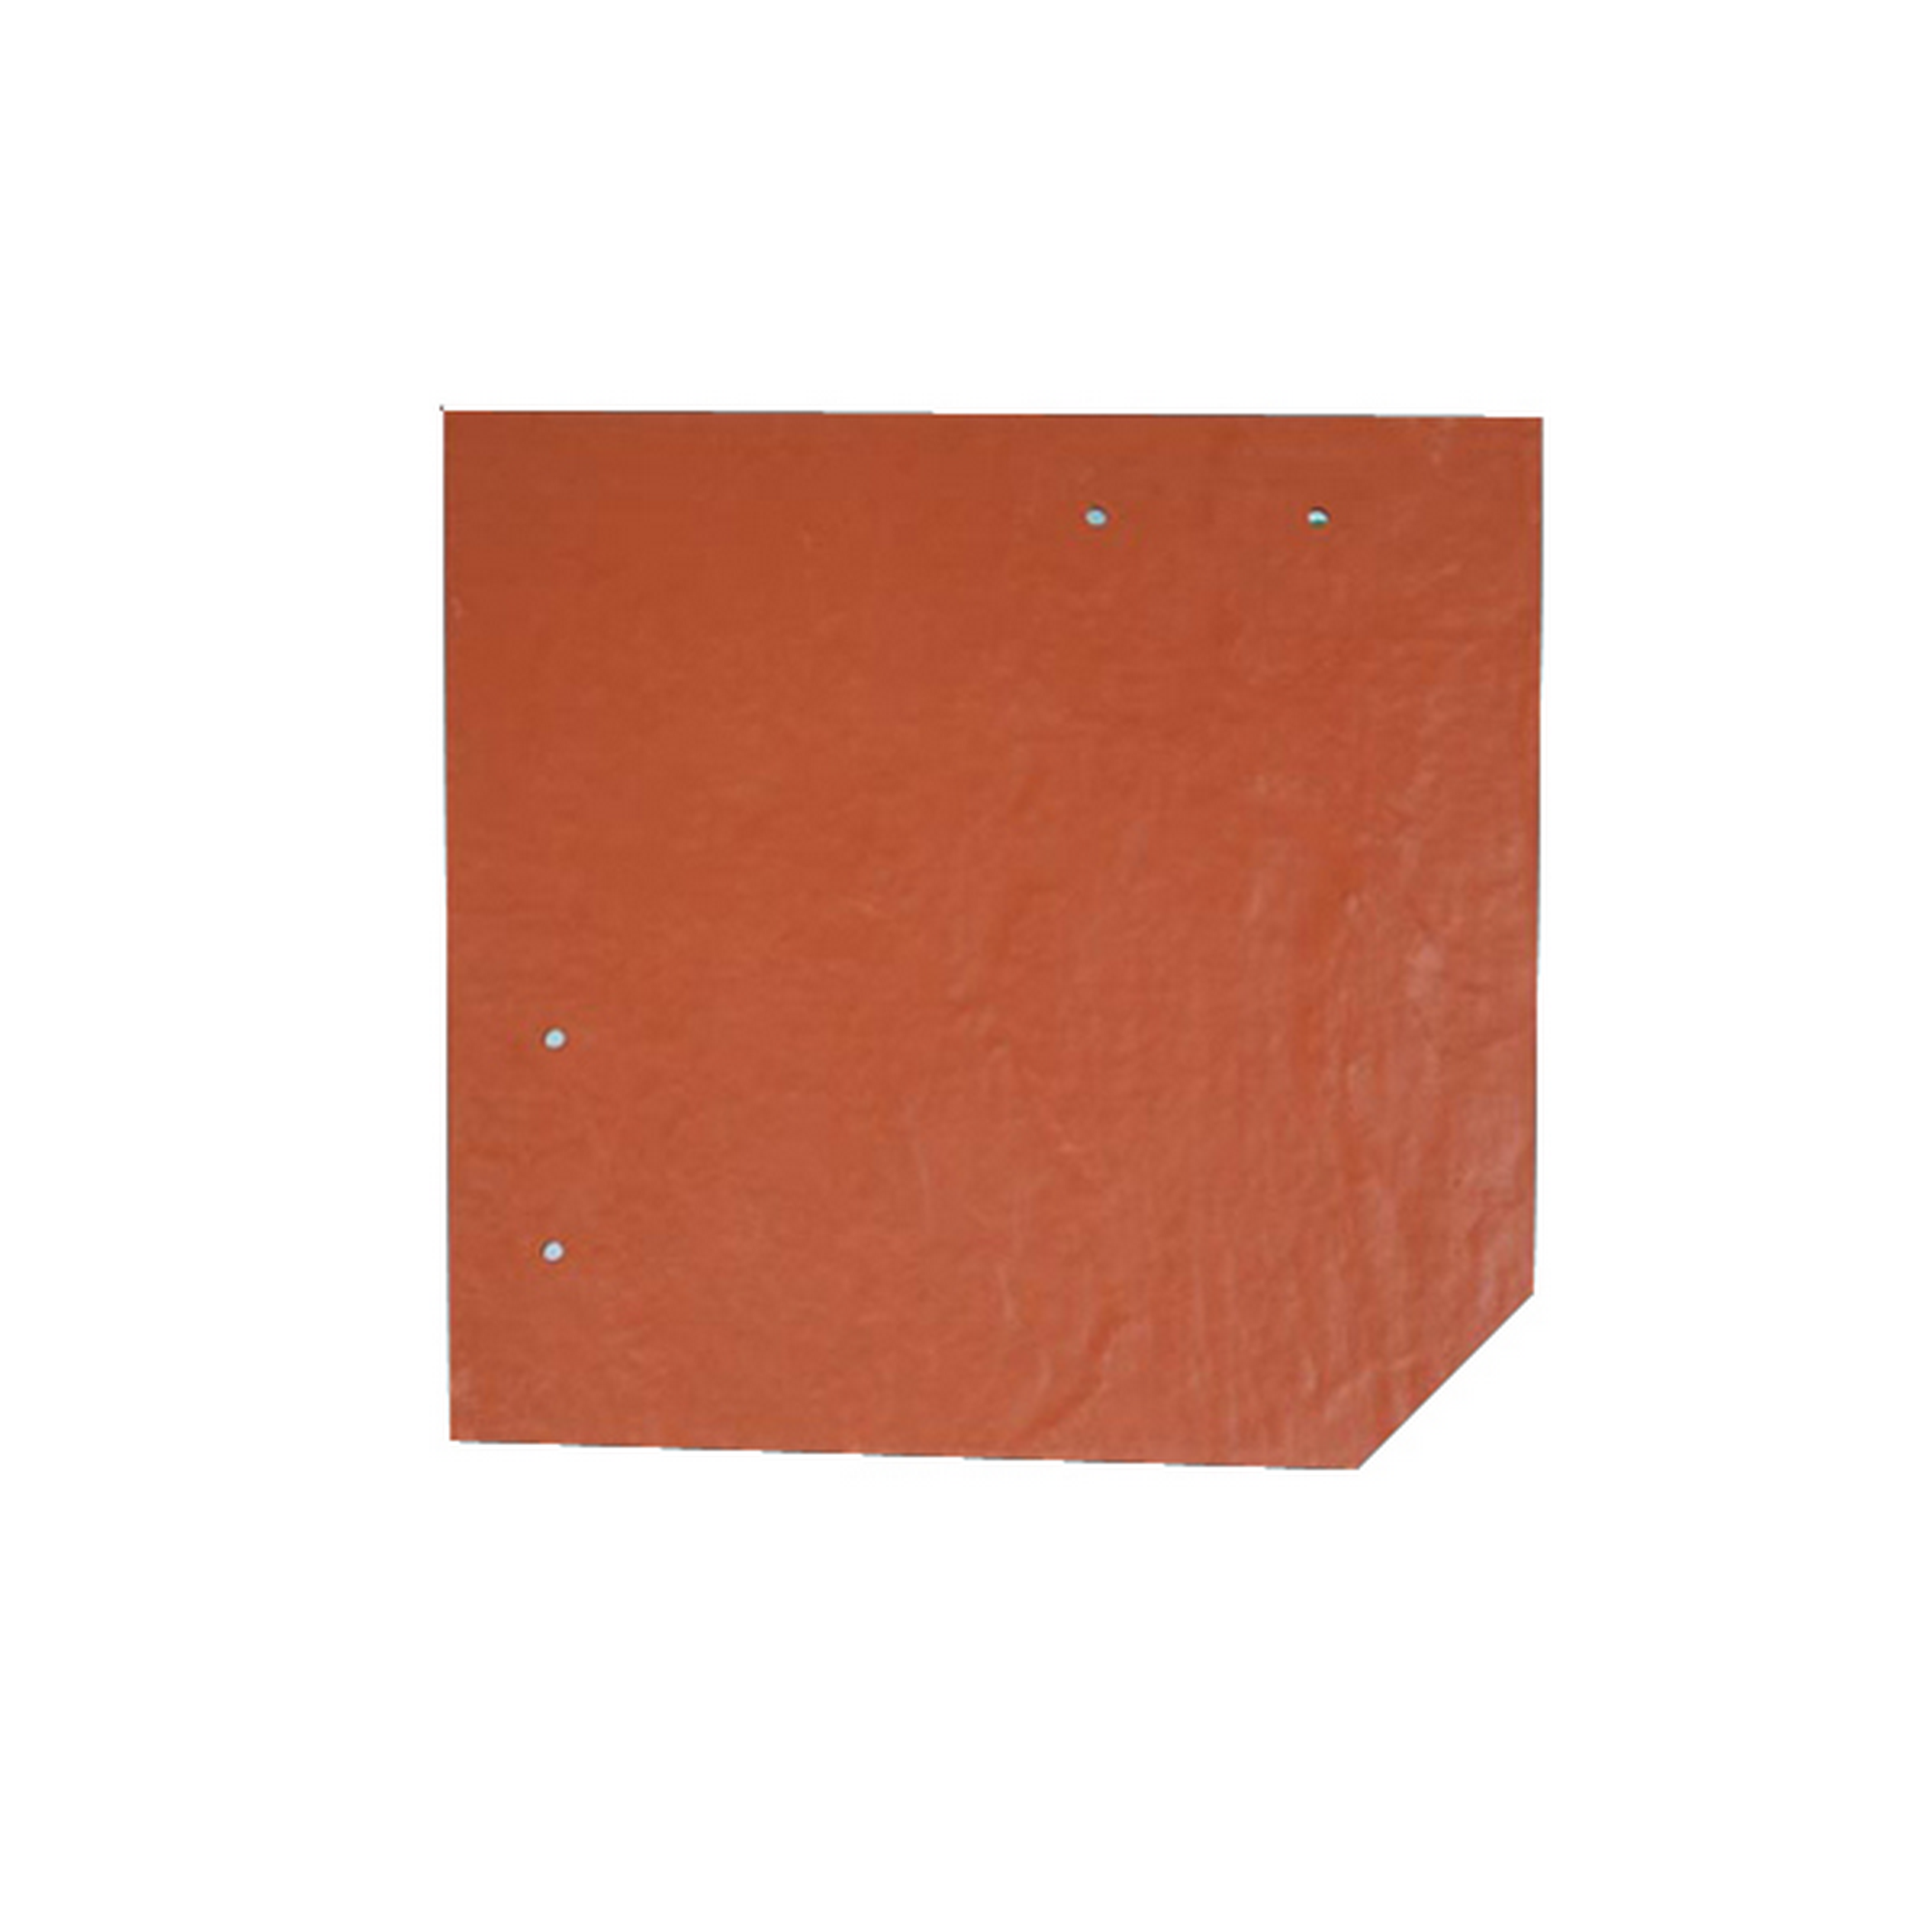 Carport 'Spreewald' rote Blende  396 x 893 cm imprägniert + product picture